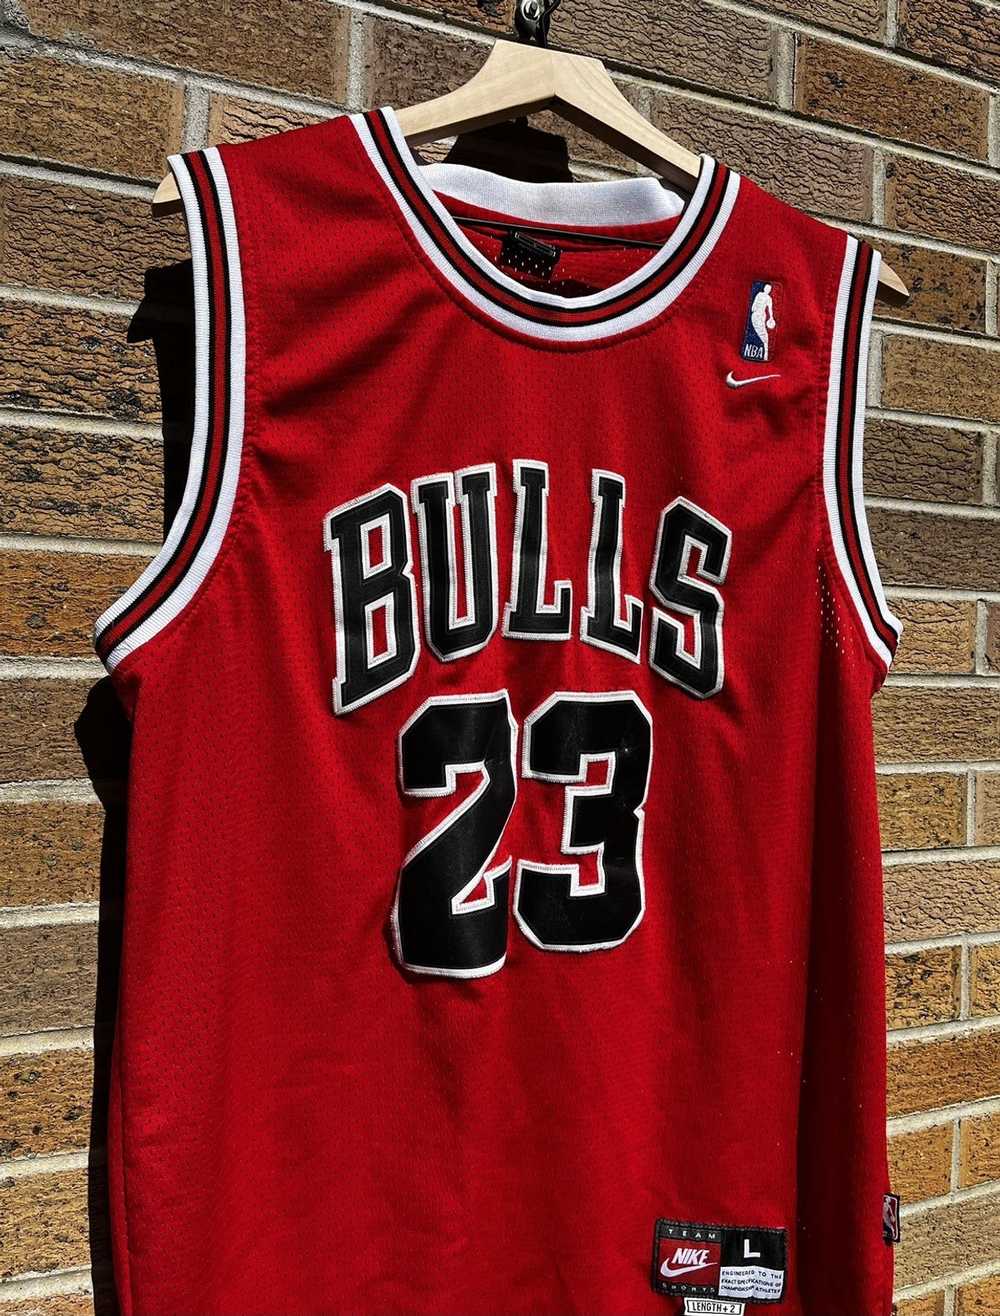 HolySport Michael Jordan Vintage 90s Chicago Bulls Tribute Soccer Jersey Shirt - NBA Basketball Red Uniform Shirt - Size Fits Large 